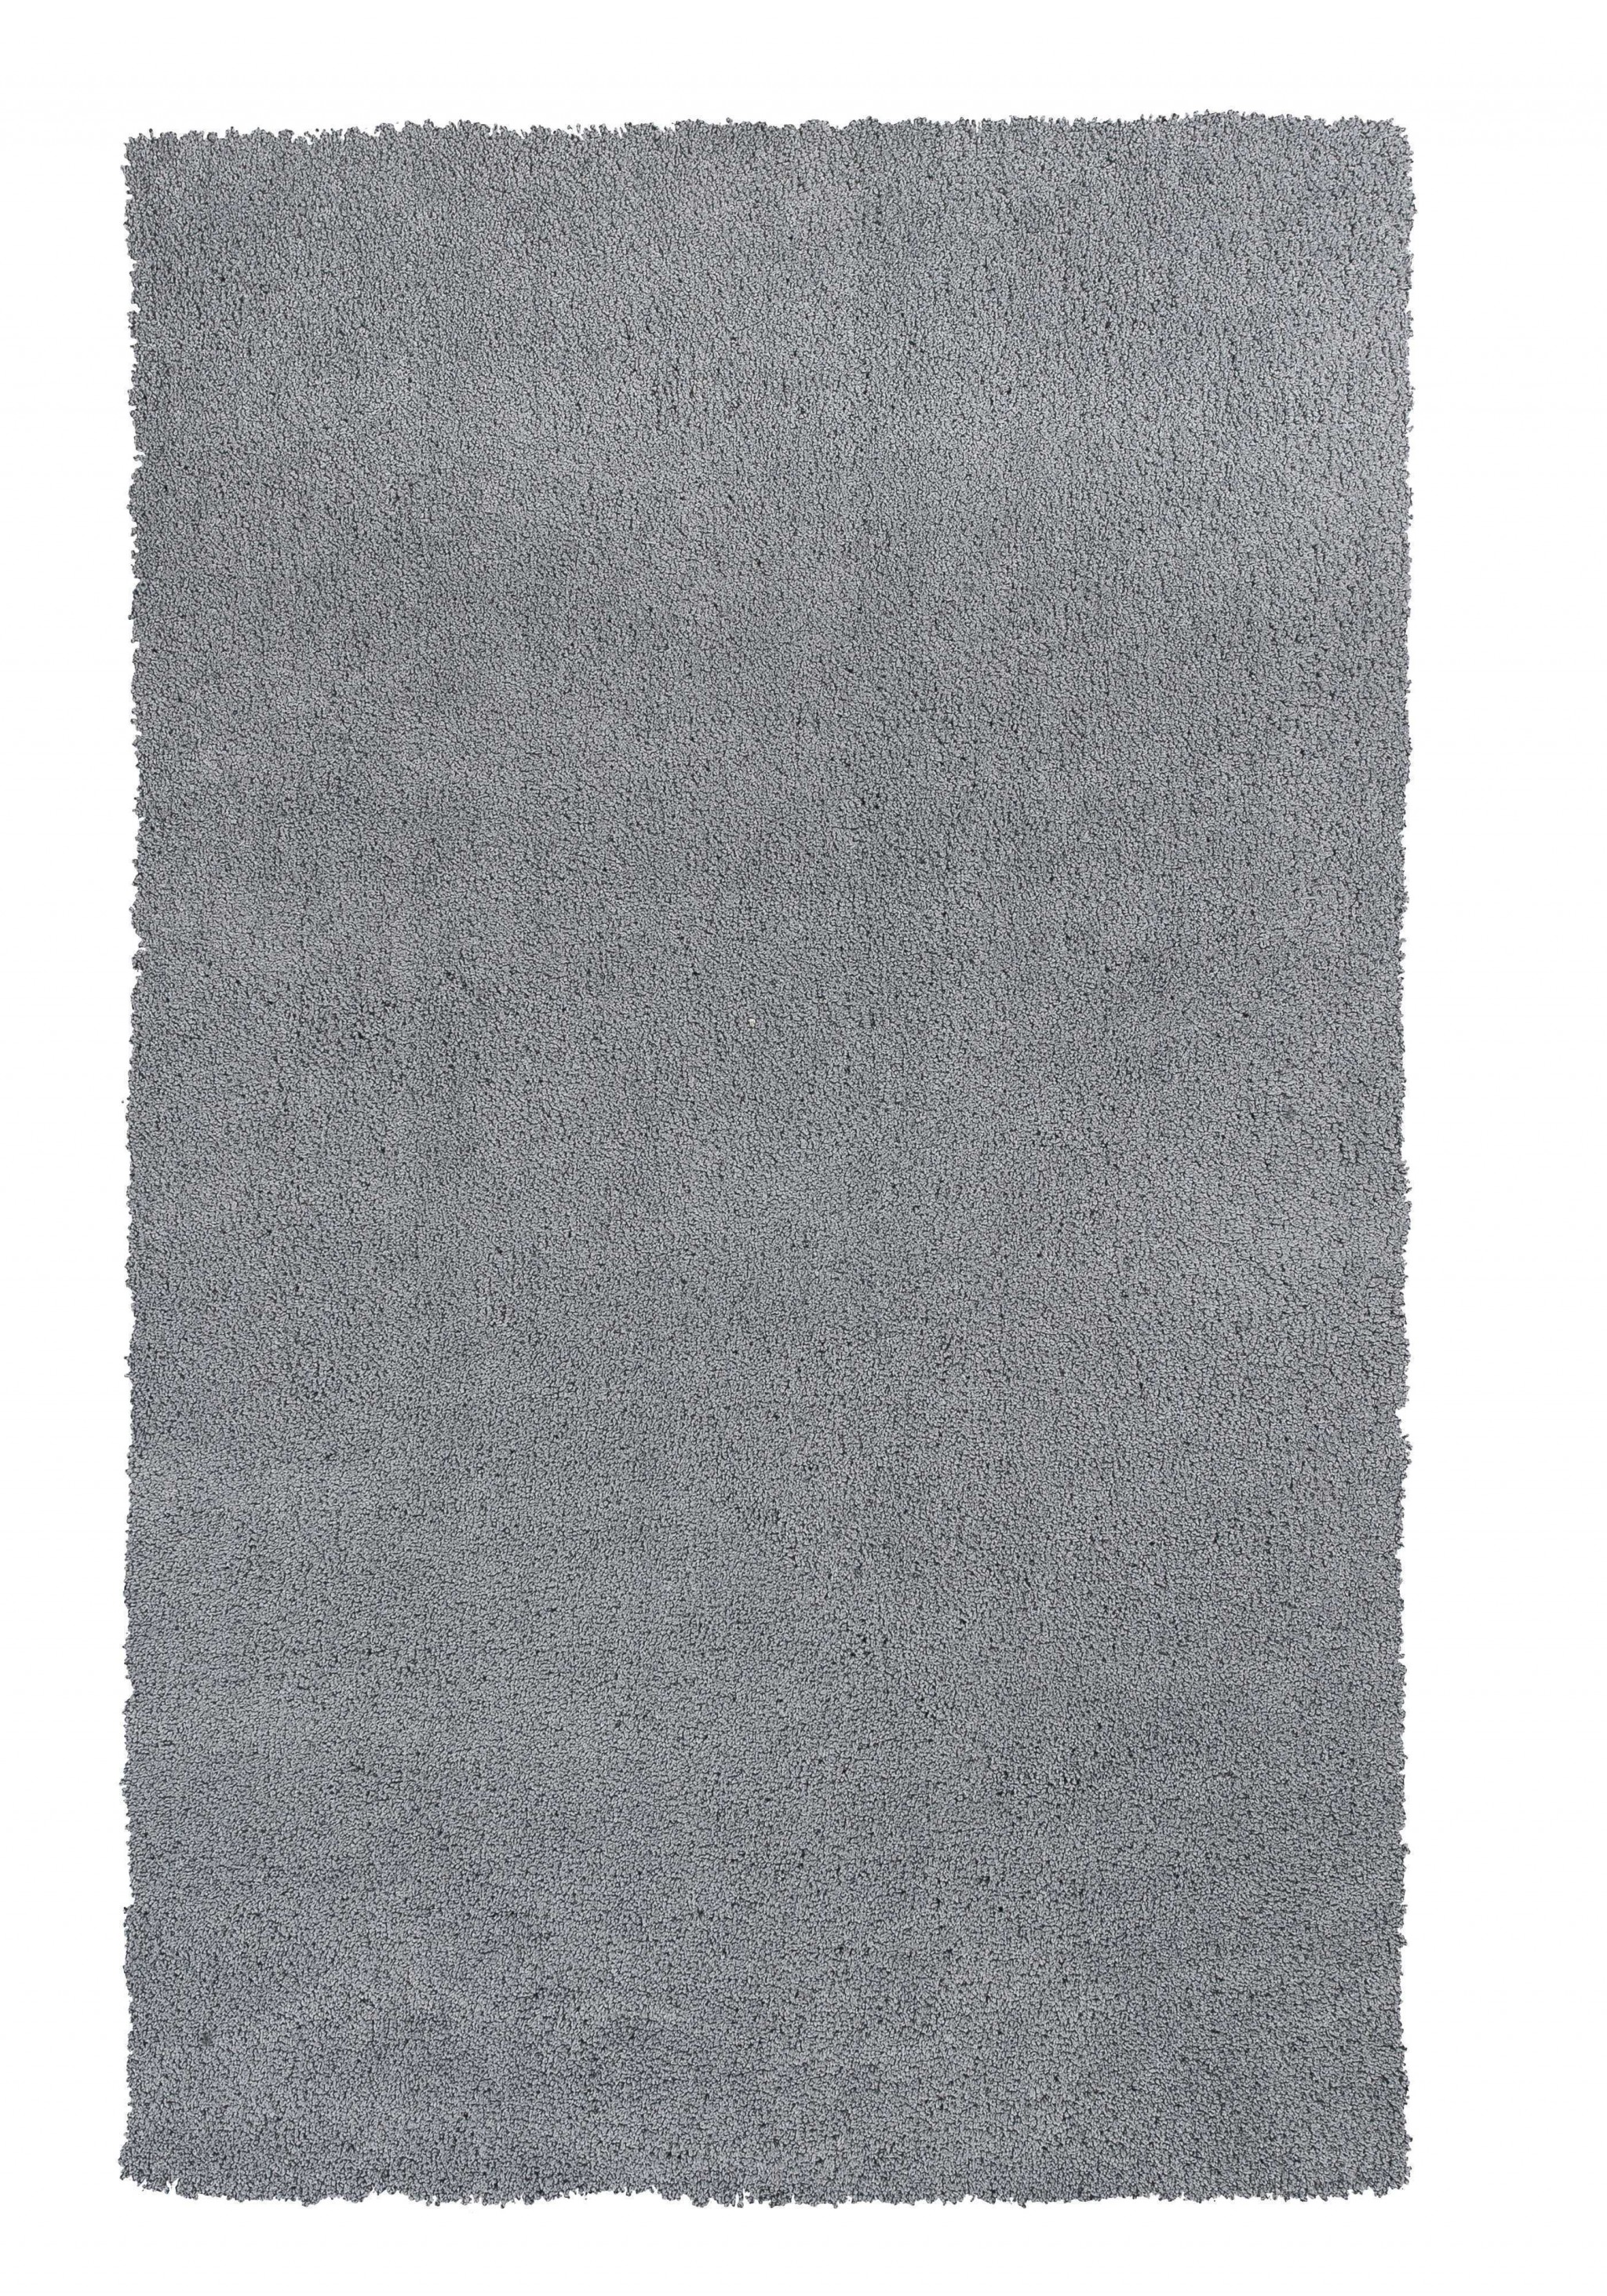 2' X 4' Polyester Grey Area Rug-353421-1